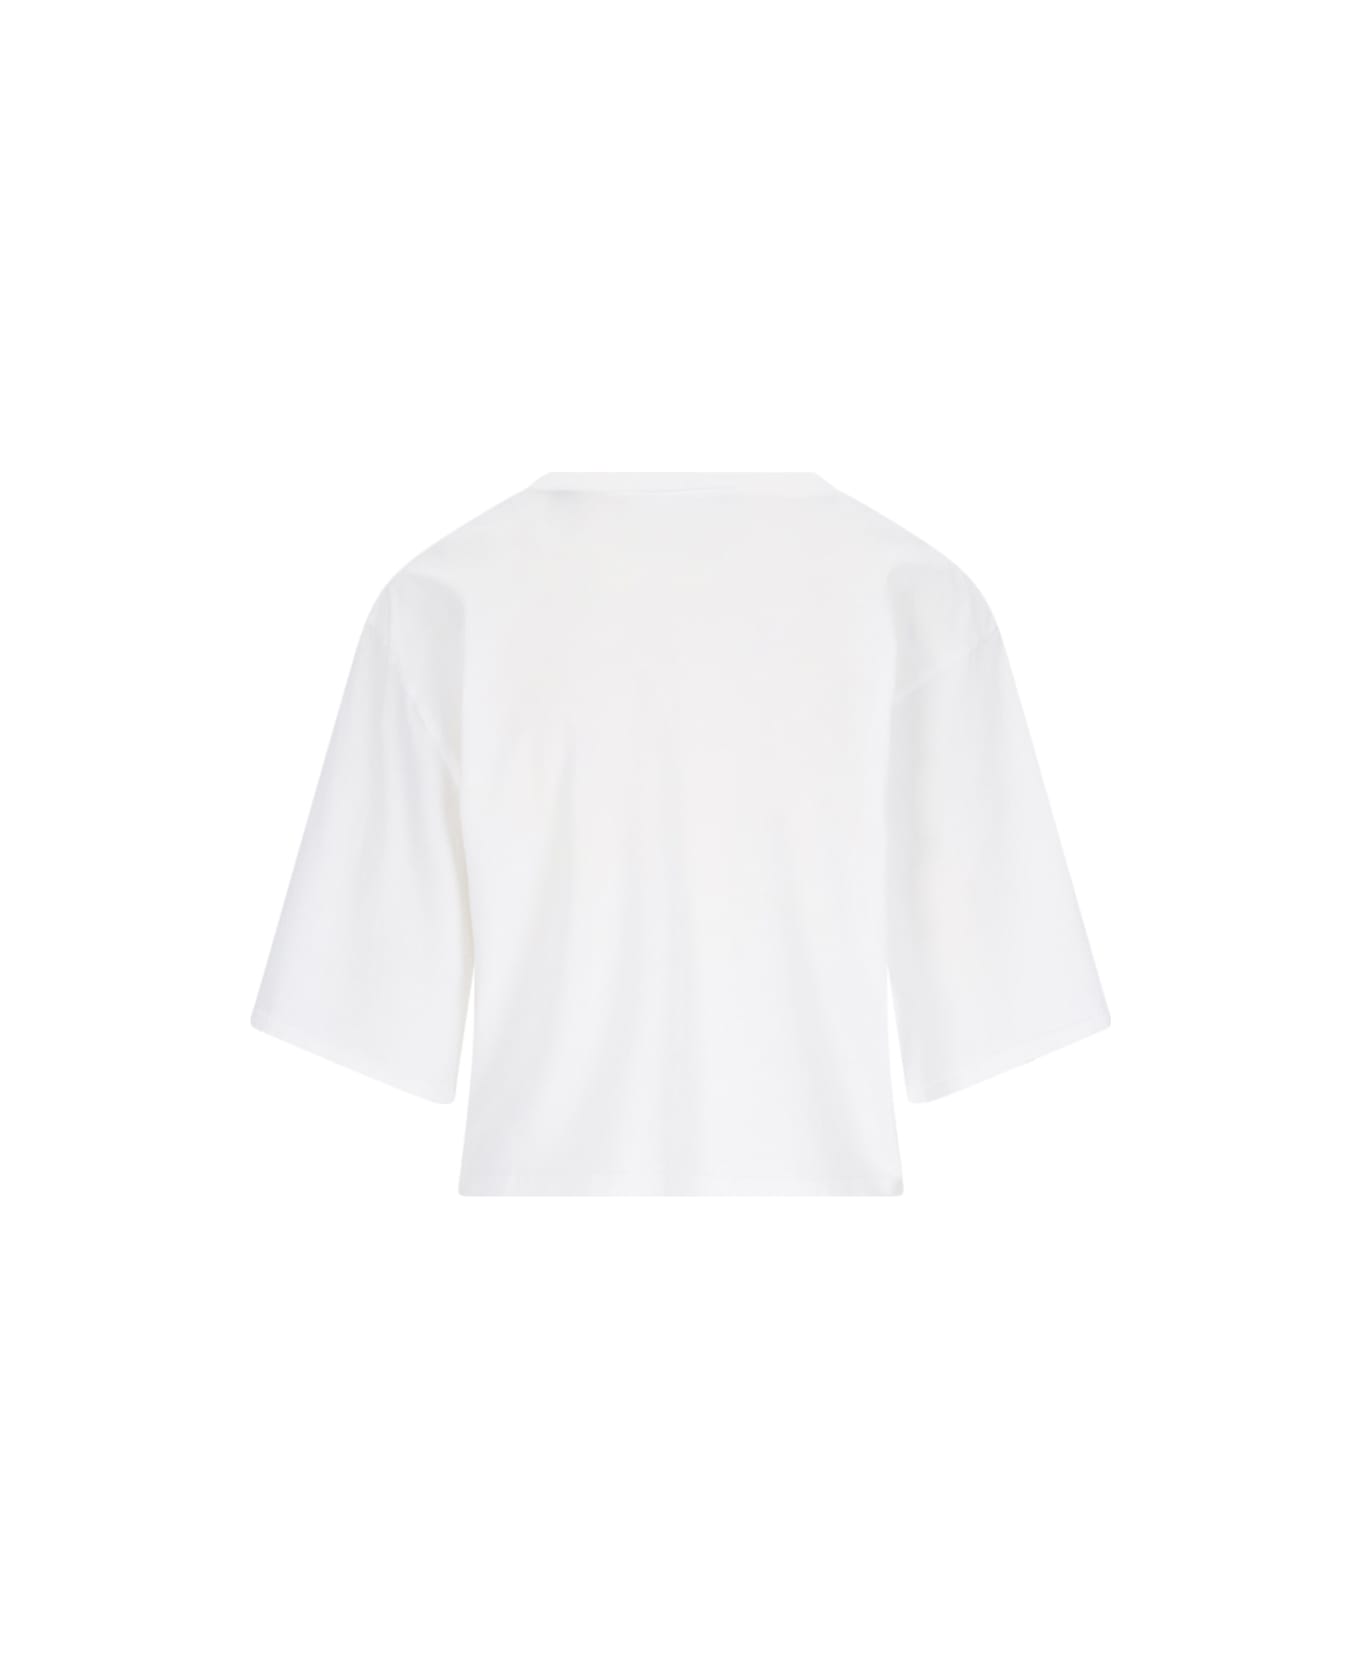 Undercover Jun Takahashi Printed Crop T-shirt - White Tシャツ